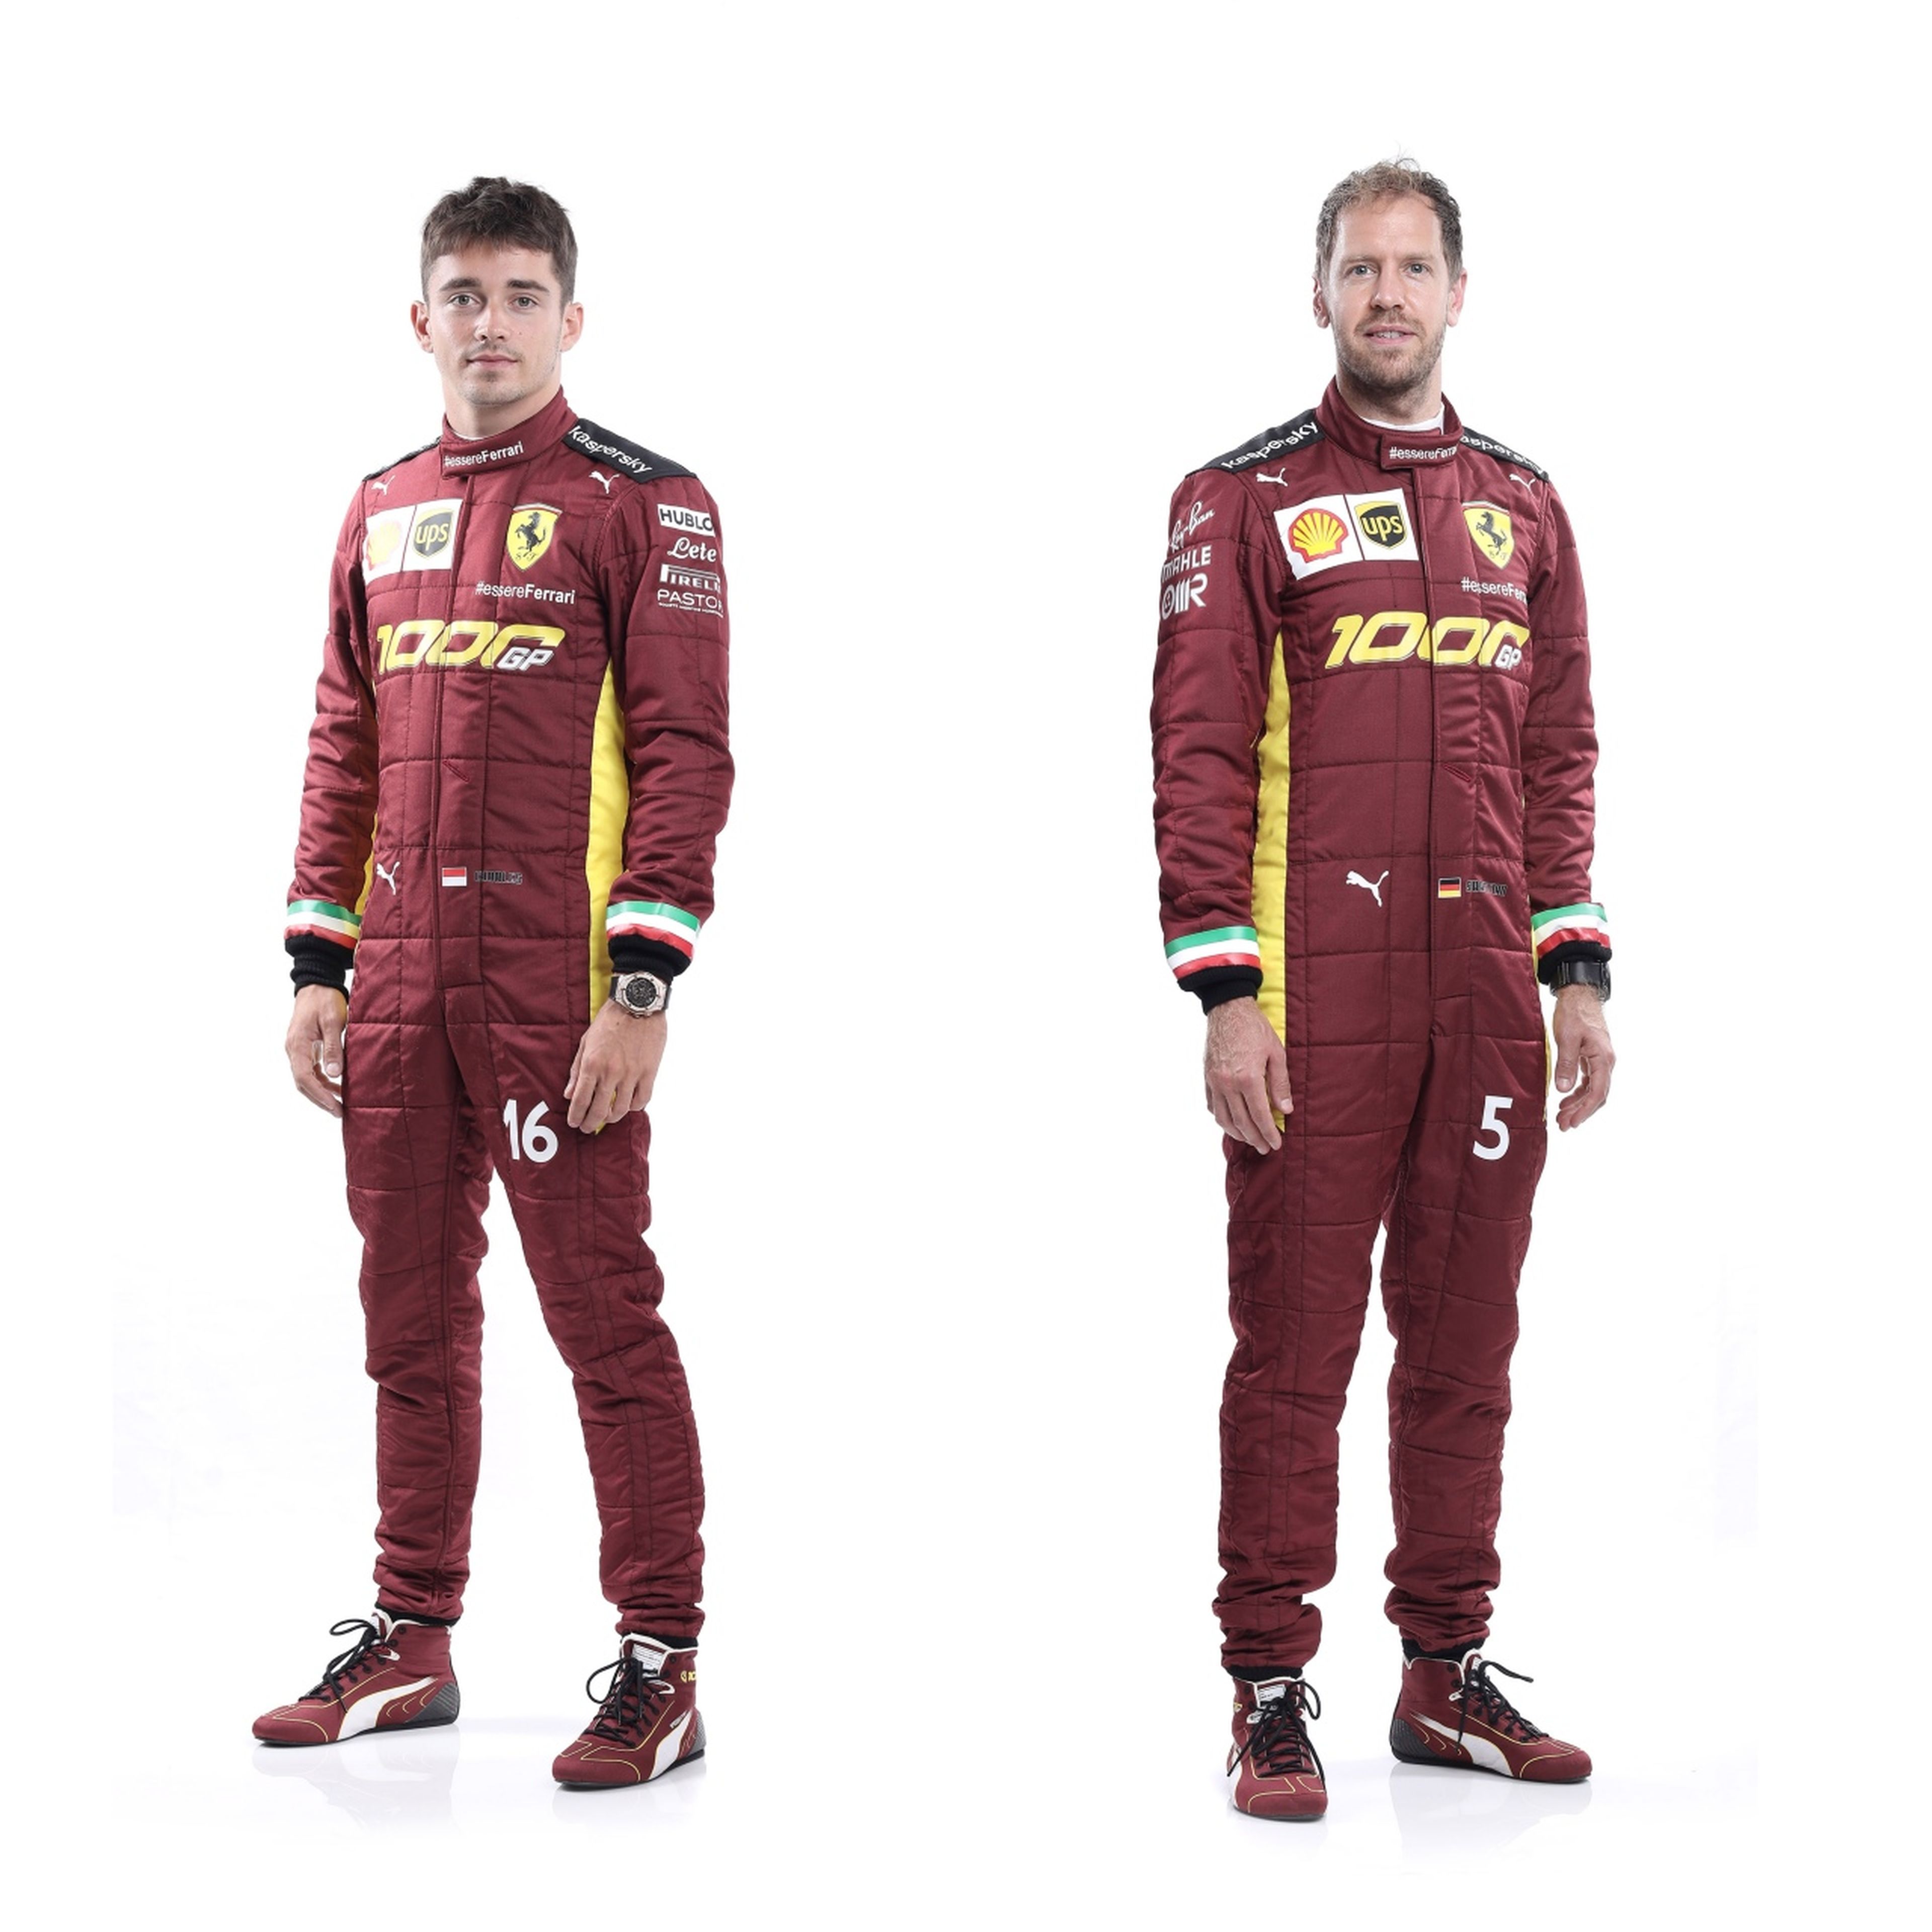 Mono Leclerc y Vettel